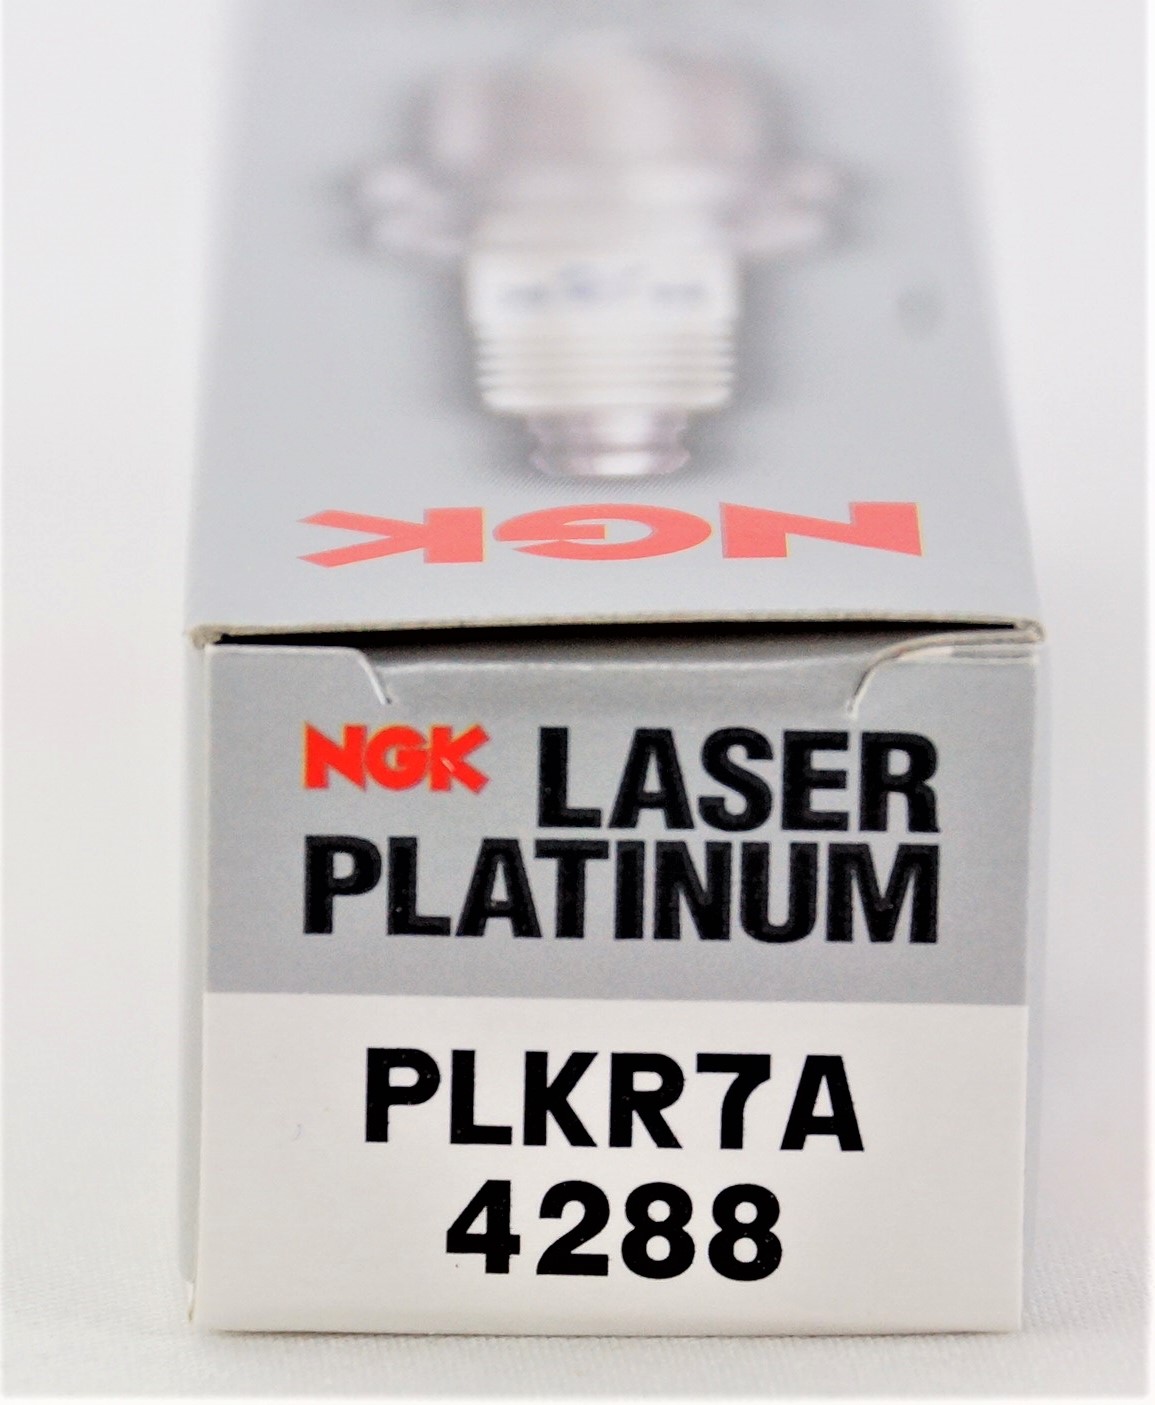 Set of 8 NGK 4288 PLKR7A Premium Laser Platinum Spark Plugs Fast Free Shipping - image 2